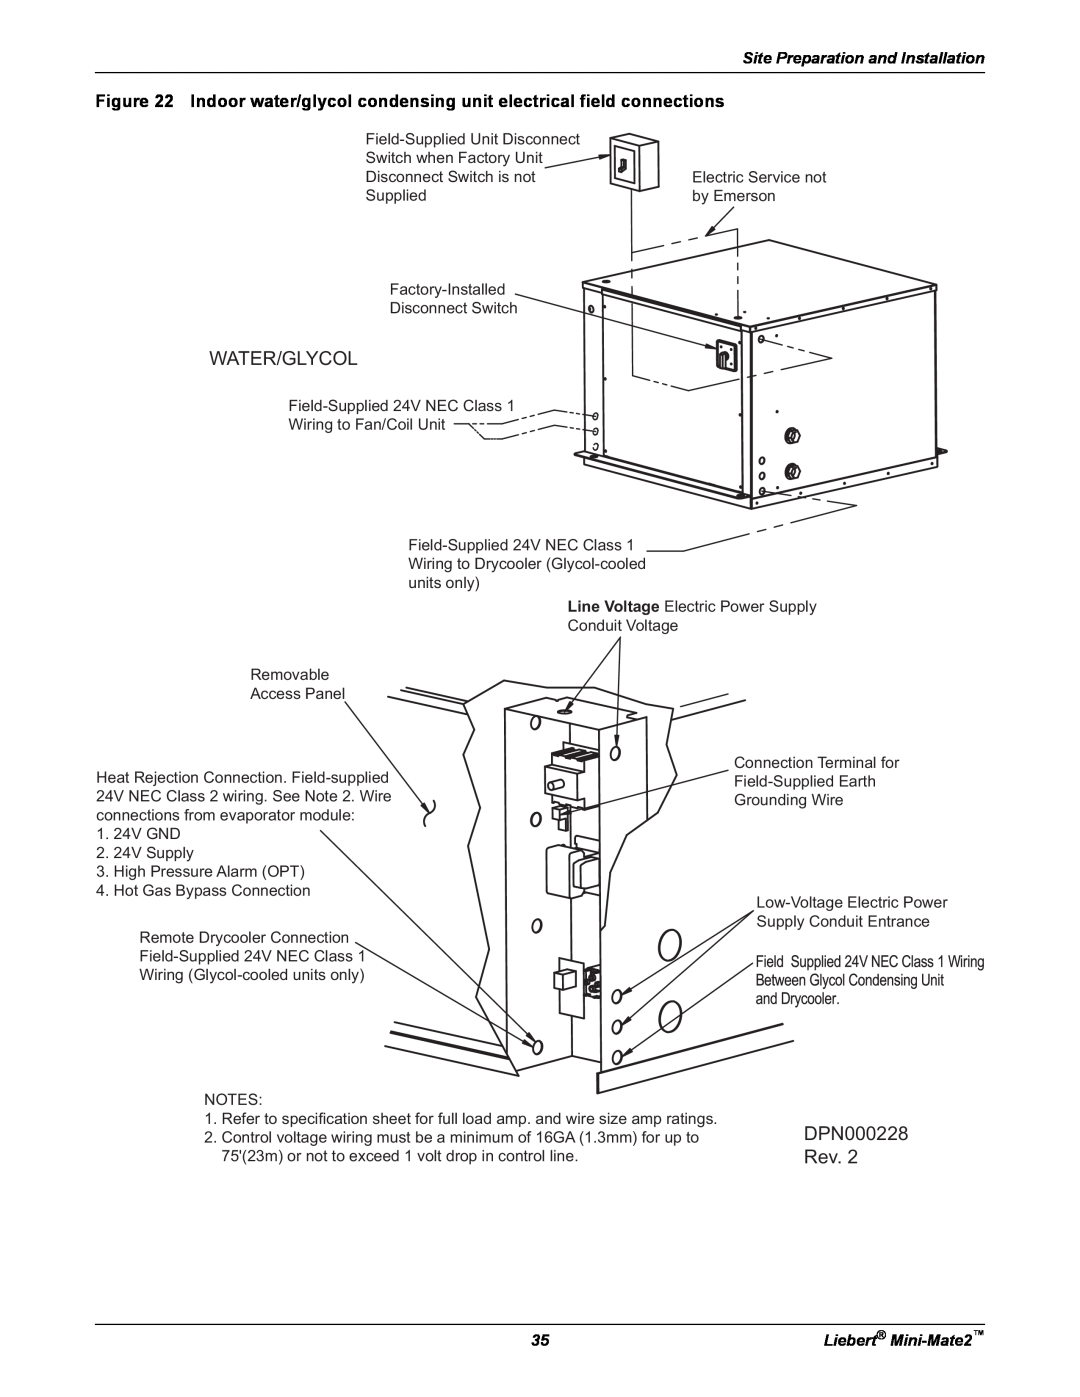 Emerson MINI-MATE2 user manual Water/Glycol, DPN000228 Rev, Site Preparation and Installation 